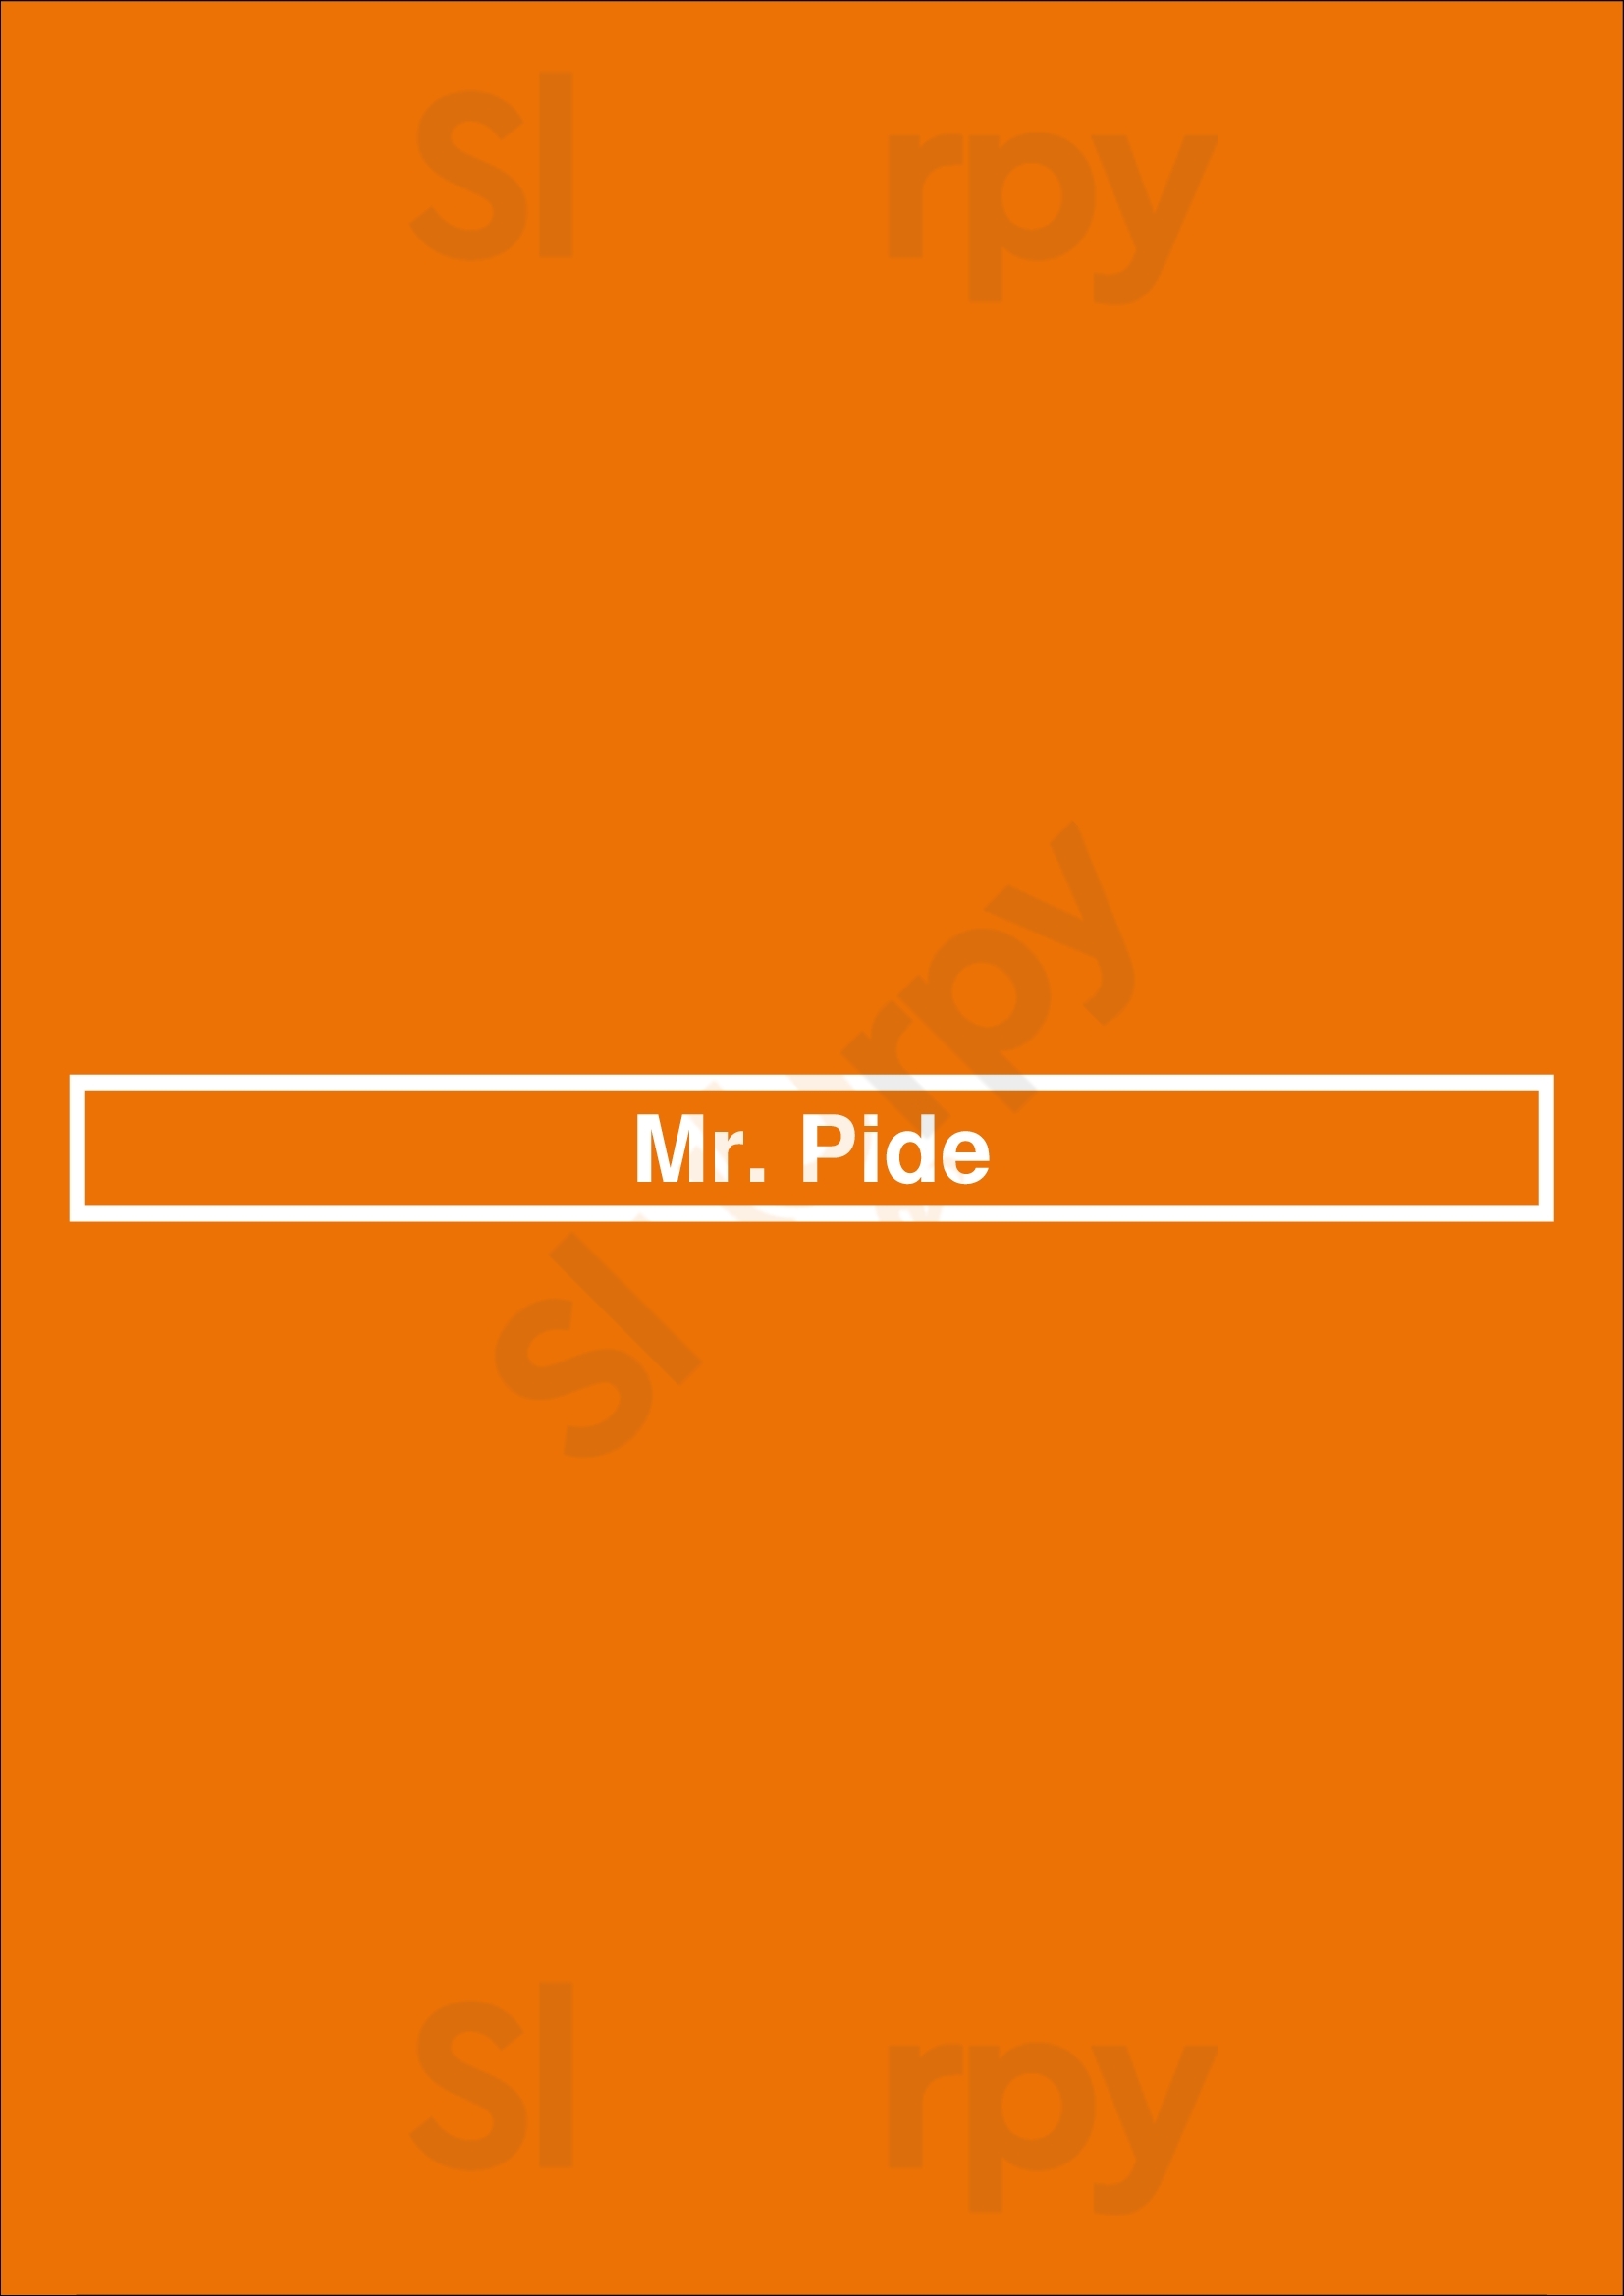 Mr. Pide Toronto Menu - 1